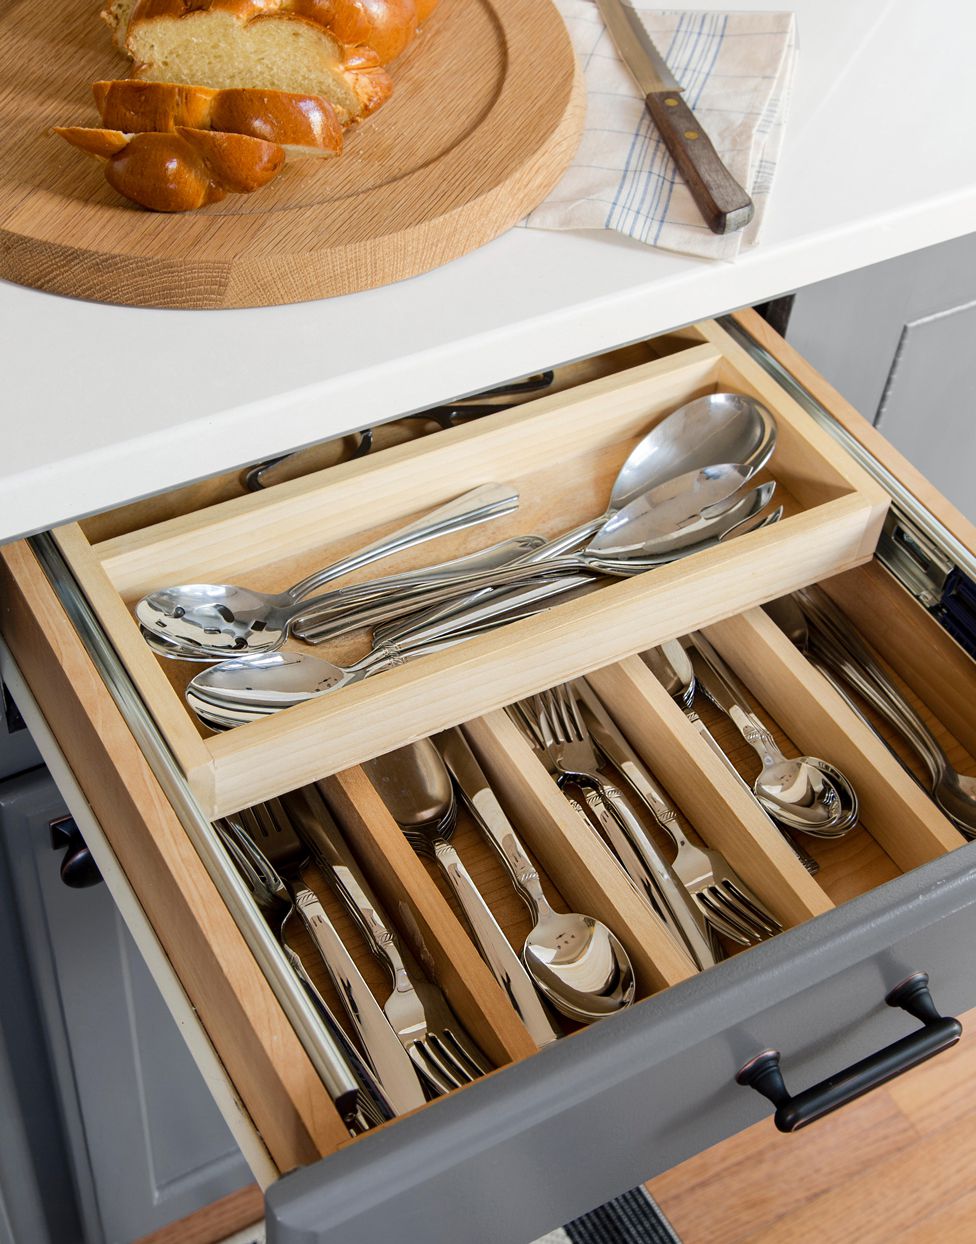 3 Choose stylish countertop crocks for everyday utensils